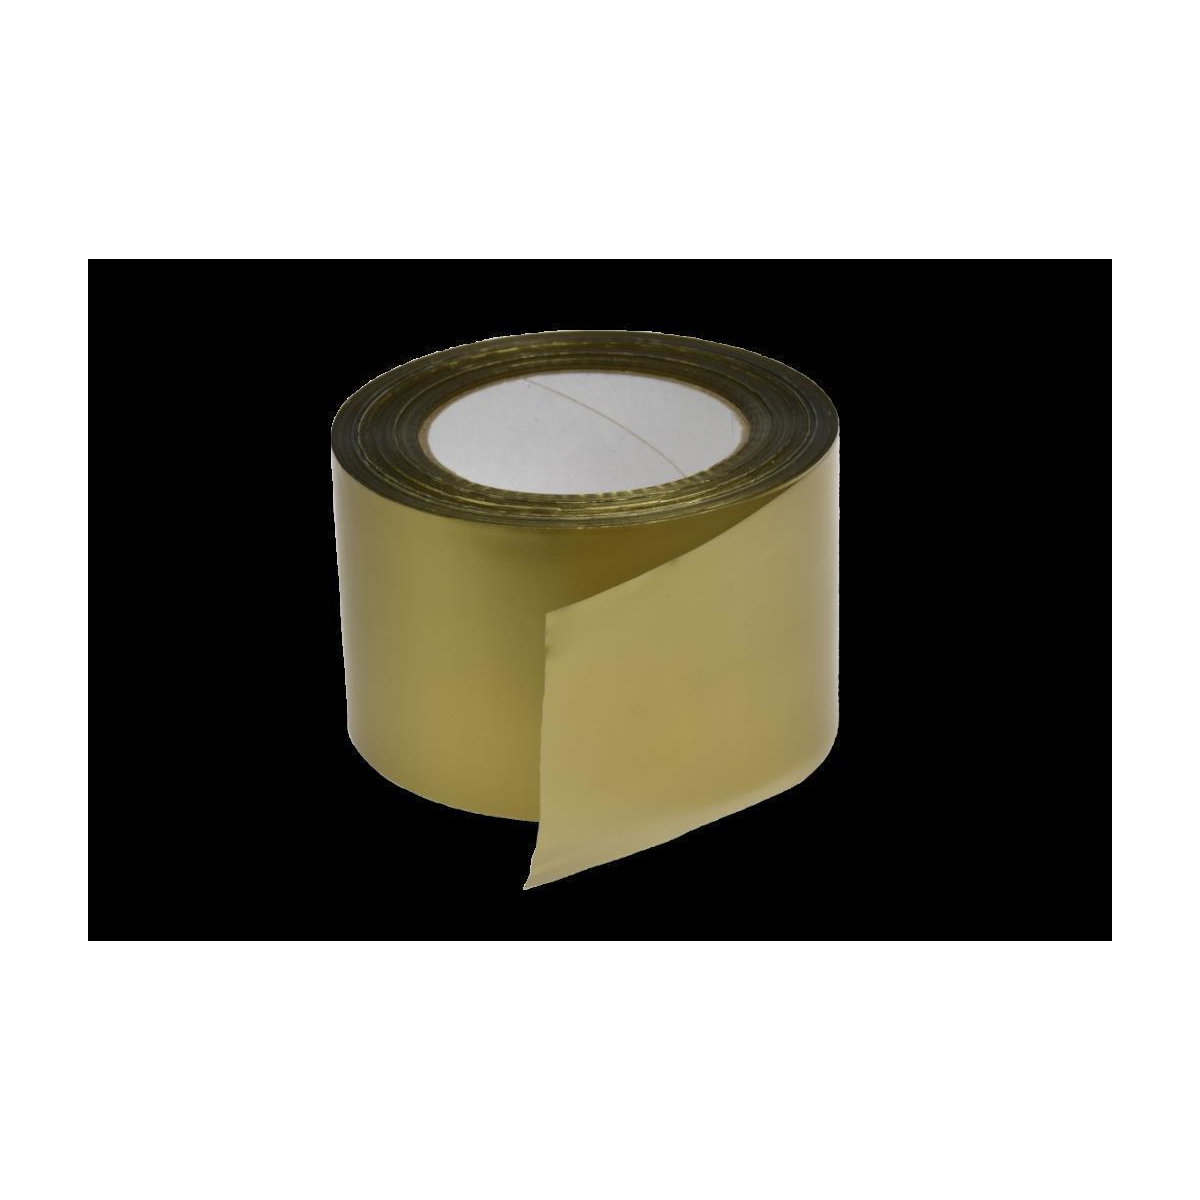 Absperrband gold 75 mm x 100 m 1 Rolle